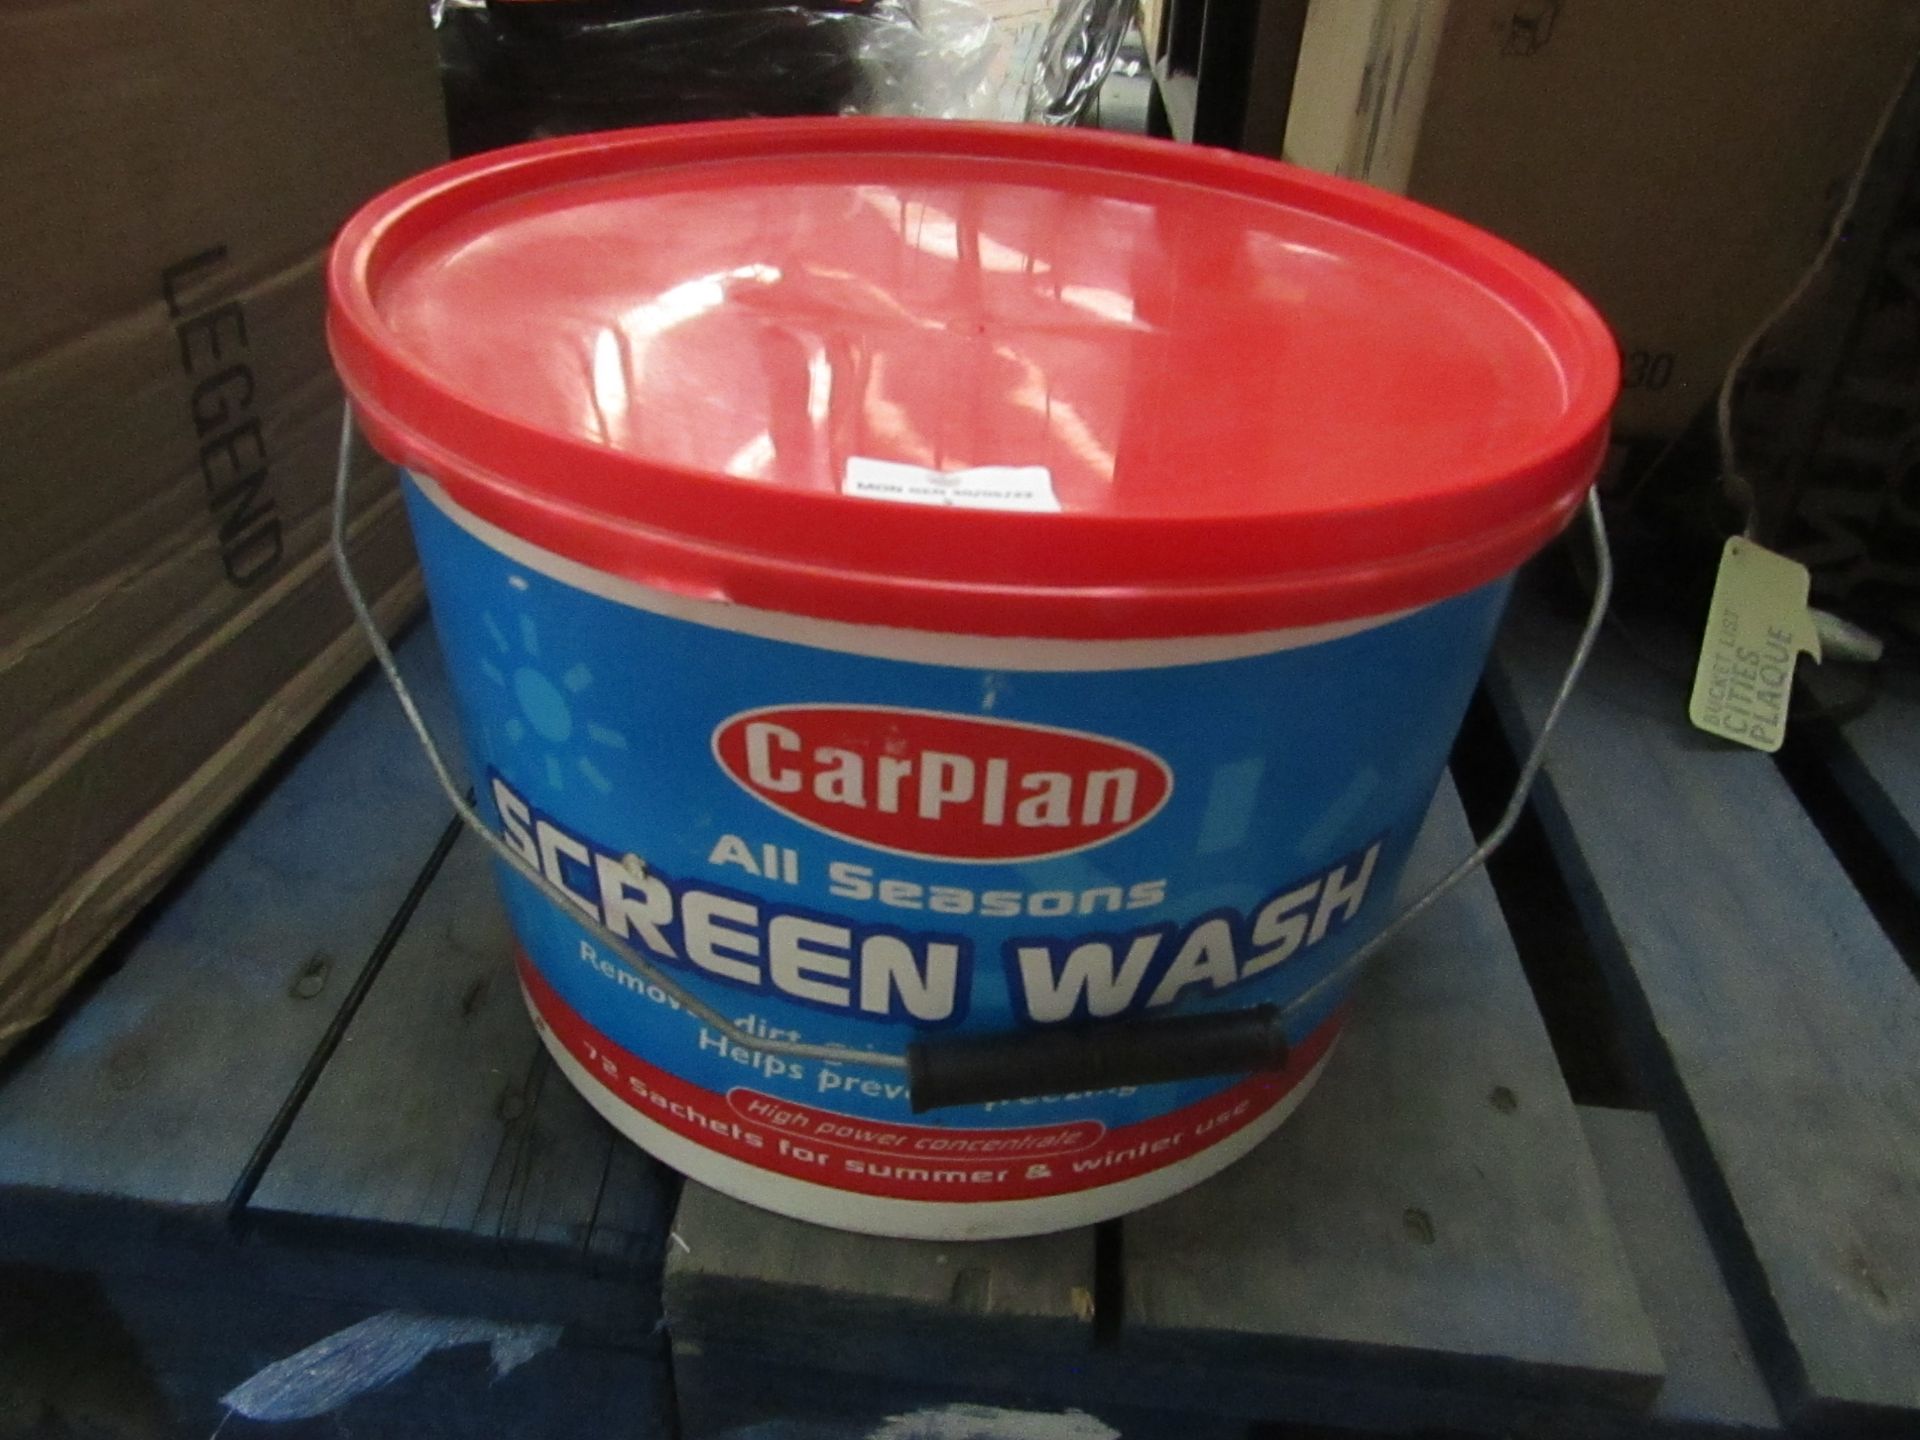 Carplan - All Season Screen Wash ( Approx 72 Sachets ) - Unchecked.